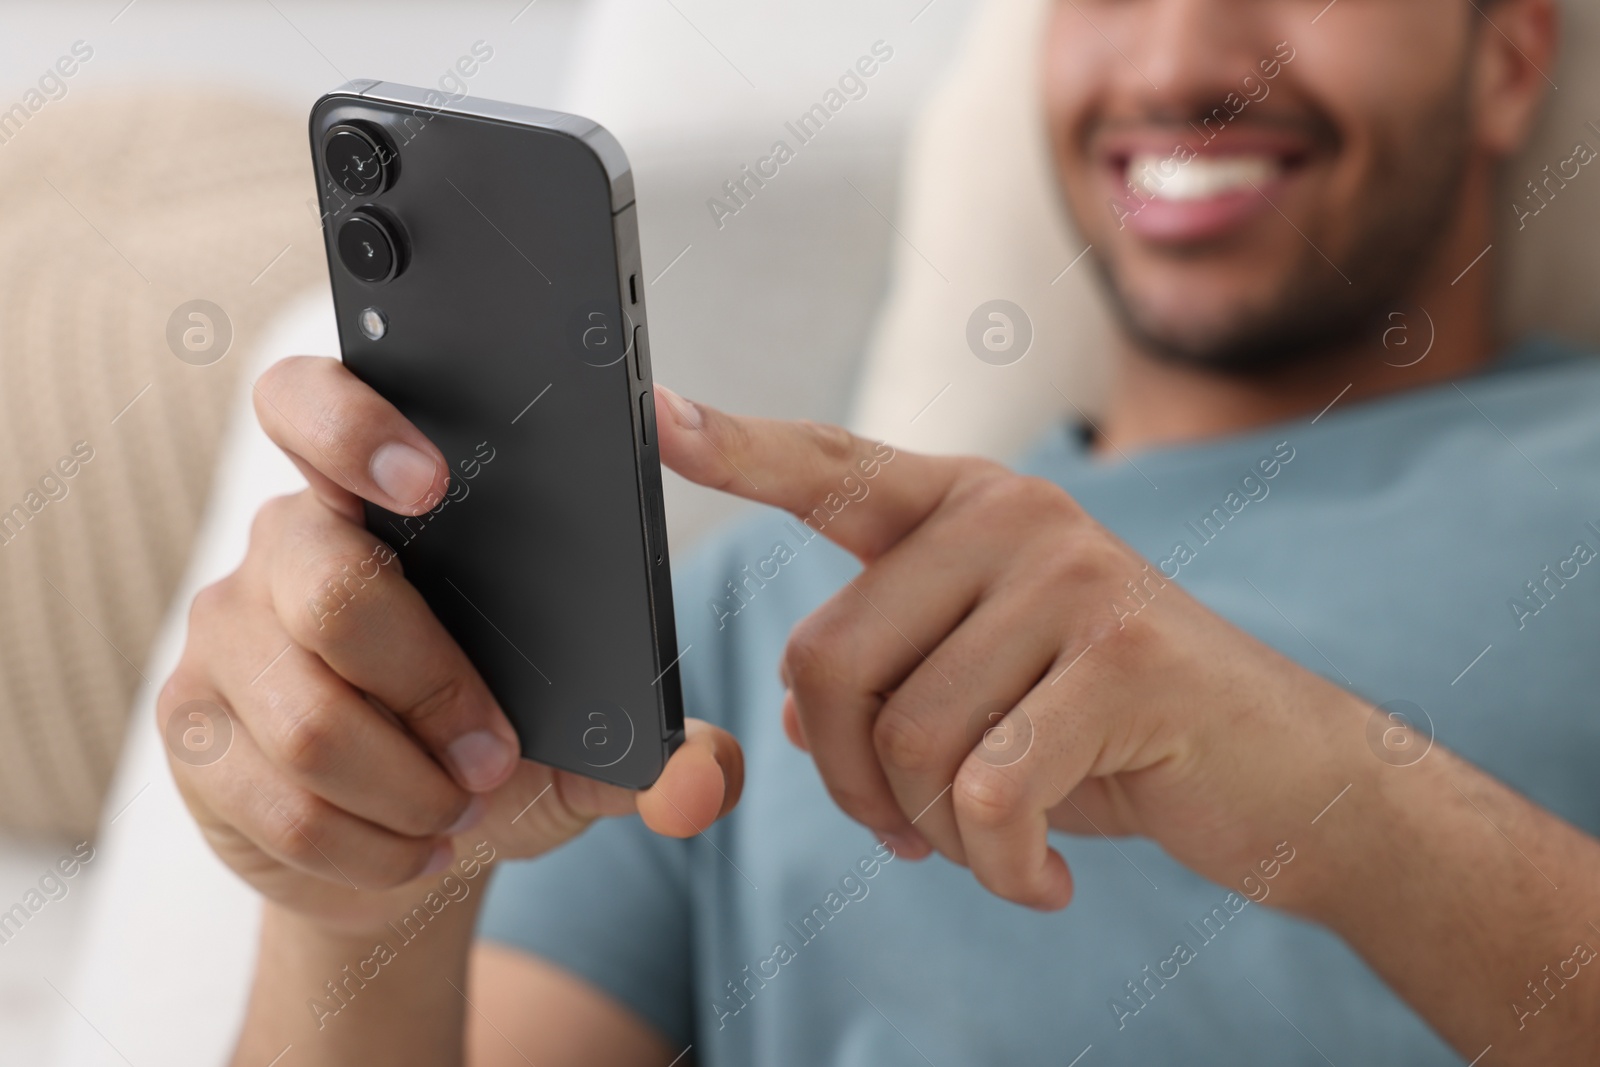 Photo of Man sending message via smartphone indoors, selective focus